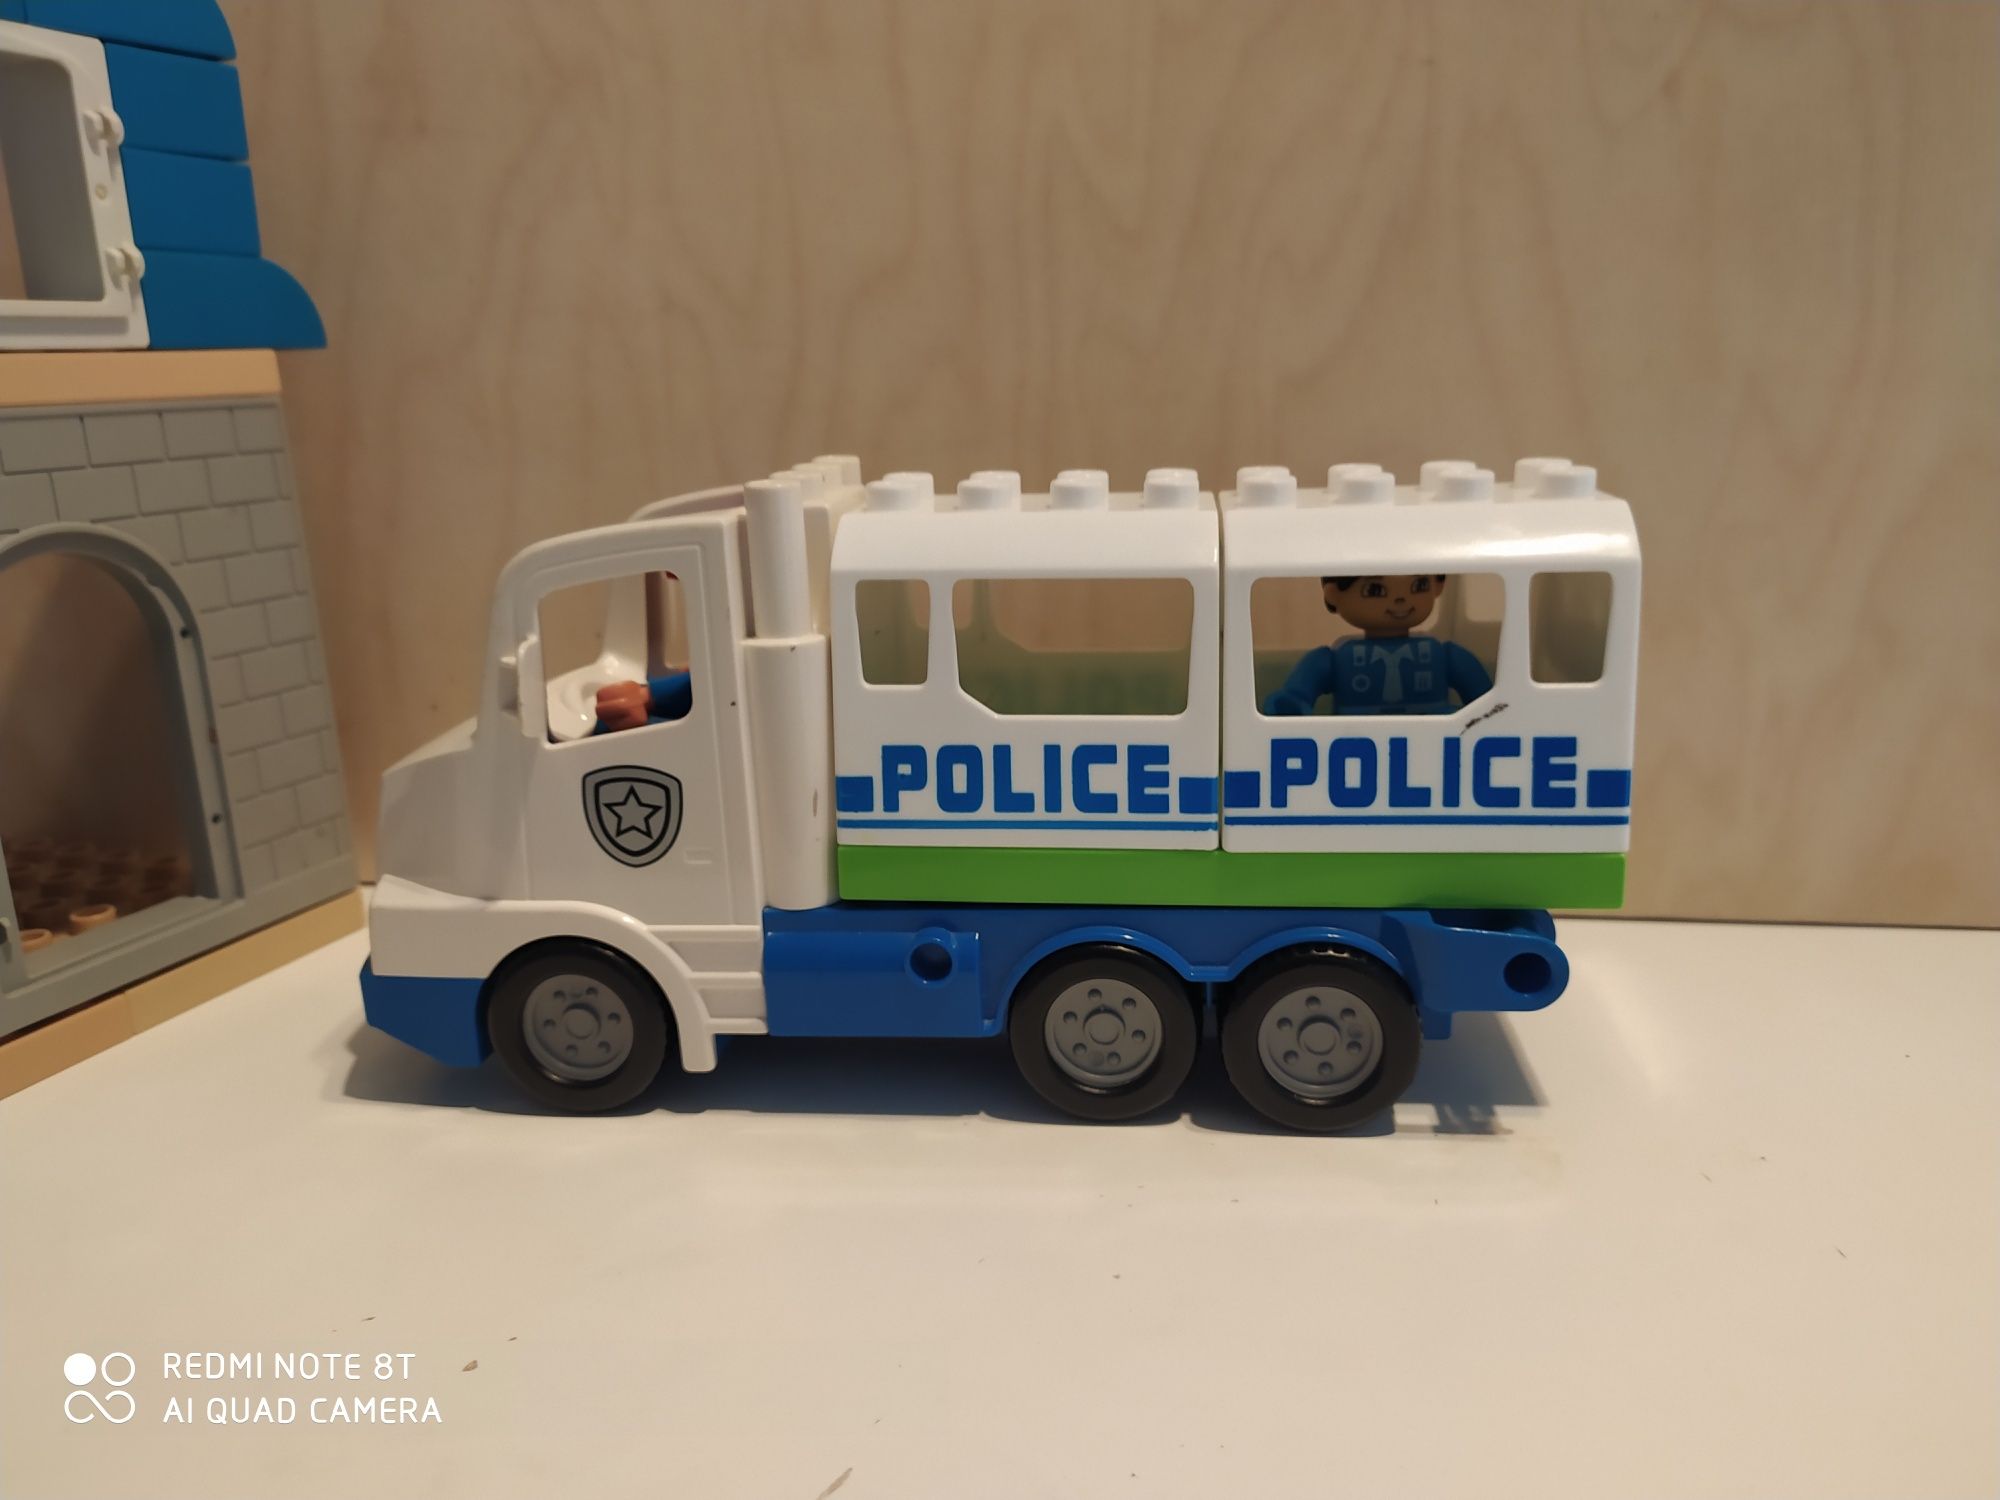 Komisariat policji klocki ala lego duplo i pojazd duplo